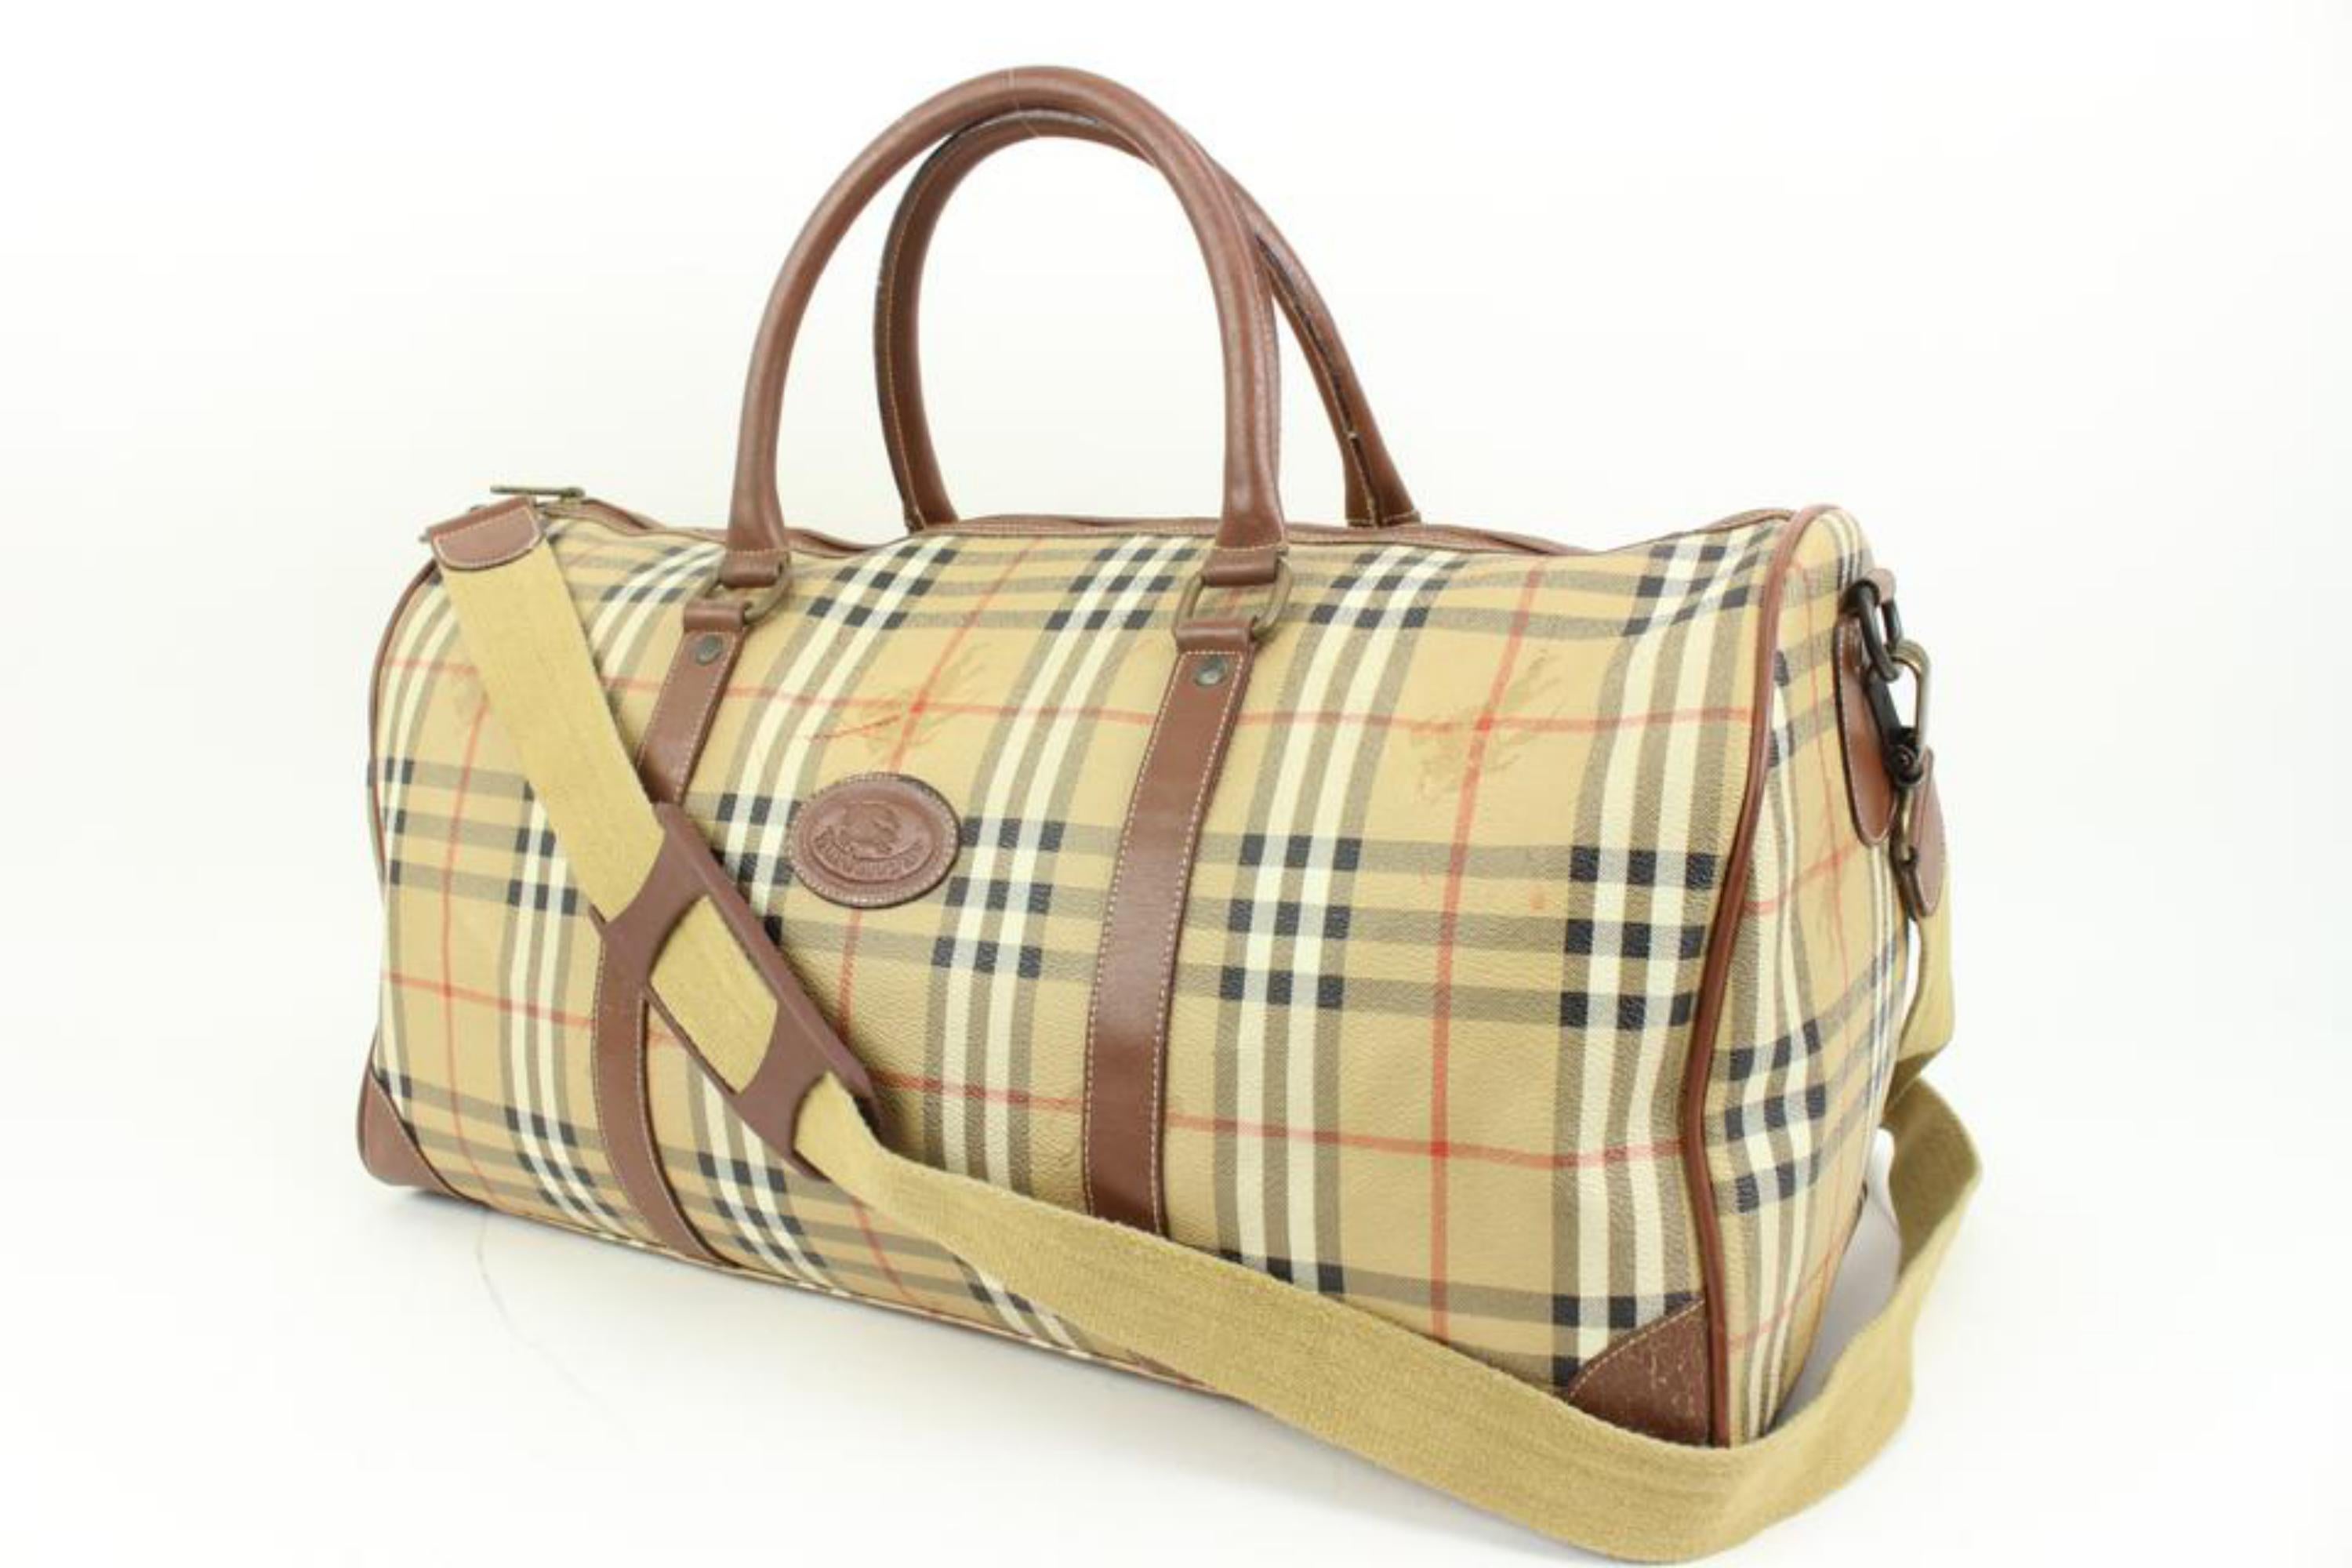 Burberrys Beige Nova Check Boston Duffle Travel Bag with Strap 48b57
Measurements: Length:  20